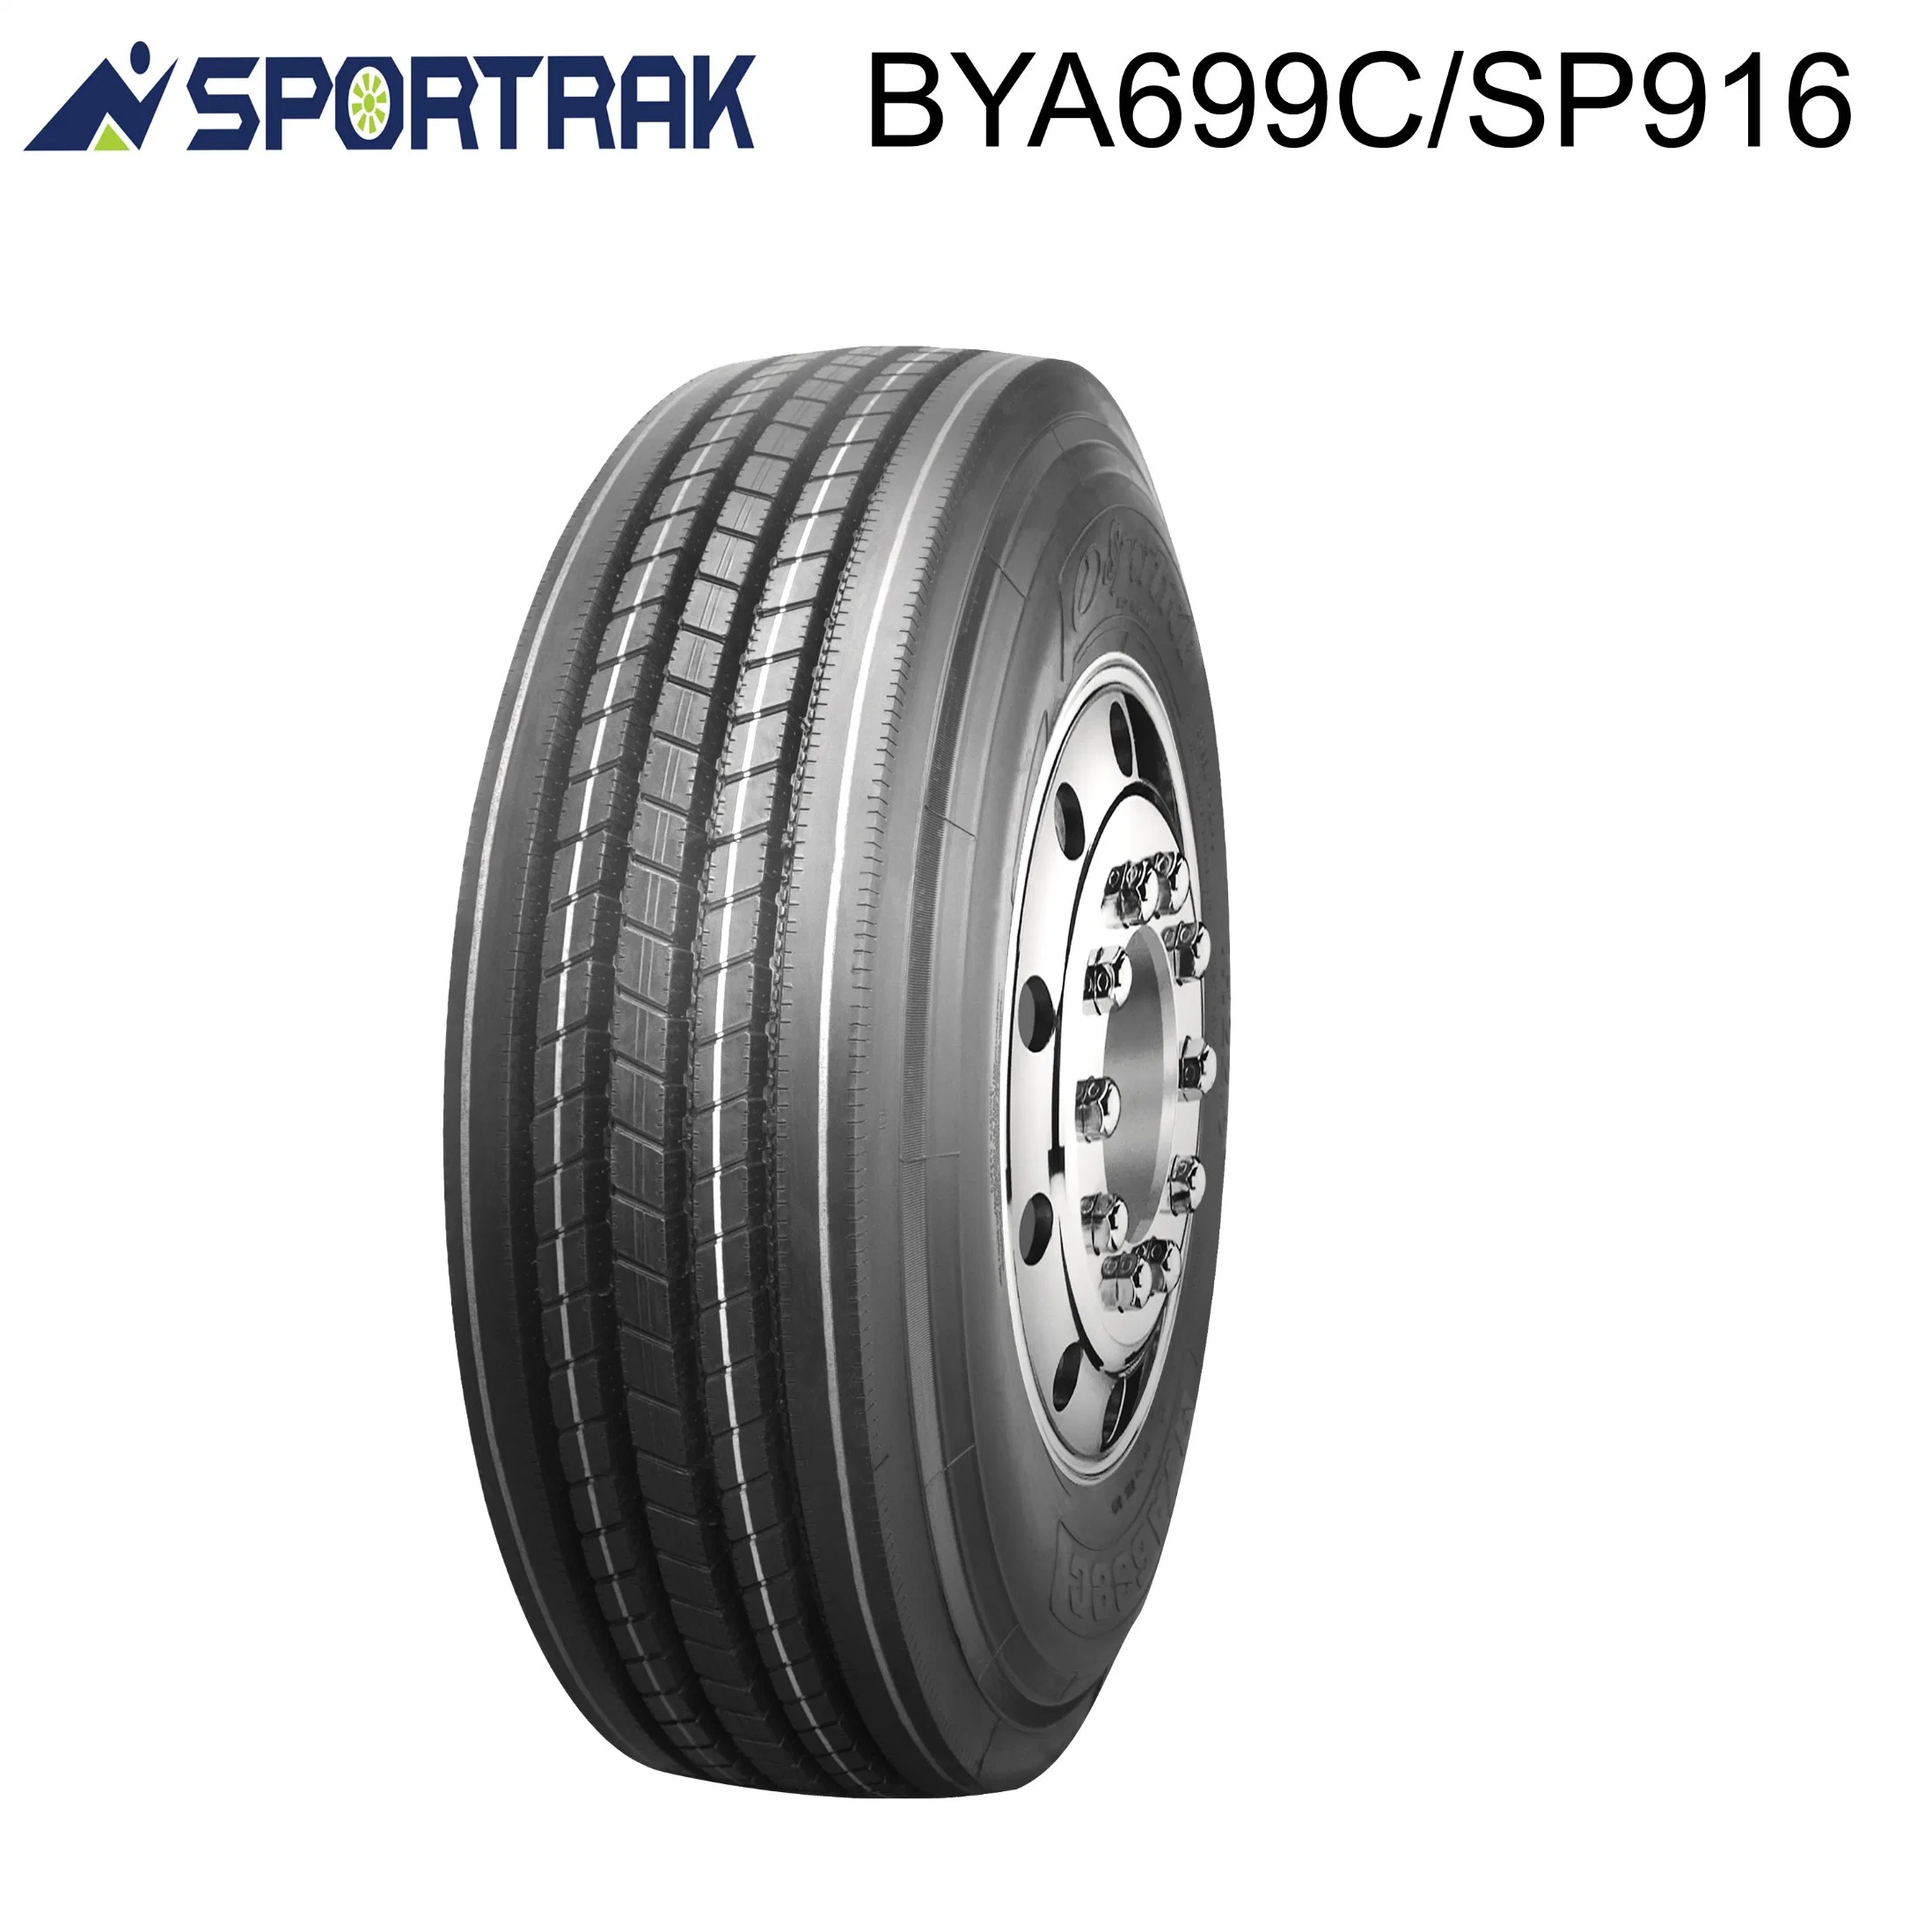 Sportrak/ Superway Truck Tyre 11r22.5 12r22.5 Truck Tyre Positions Australia